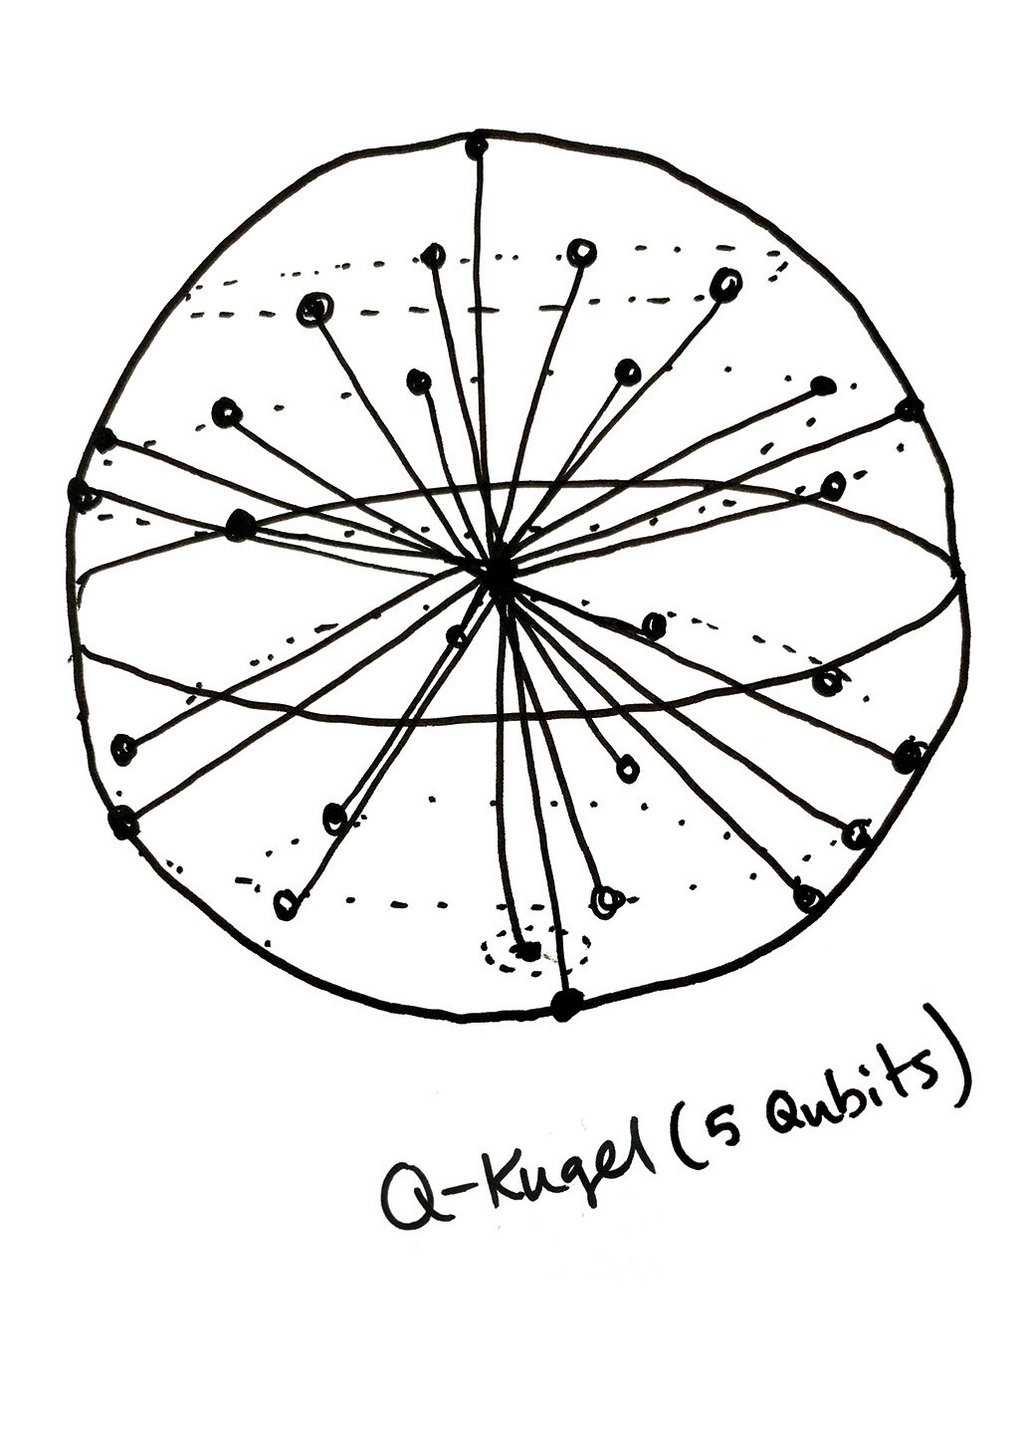 Geometric drawing of a Q sphere consisting of 5 qubits.